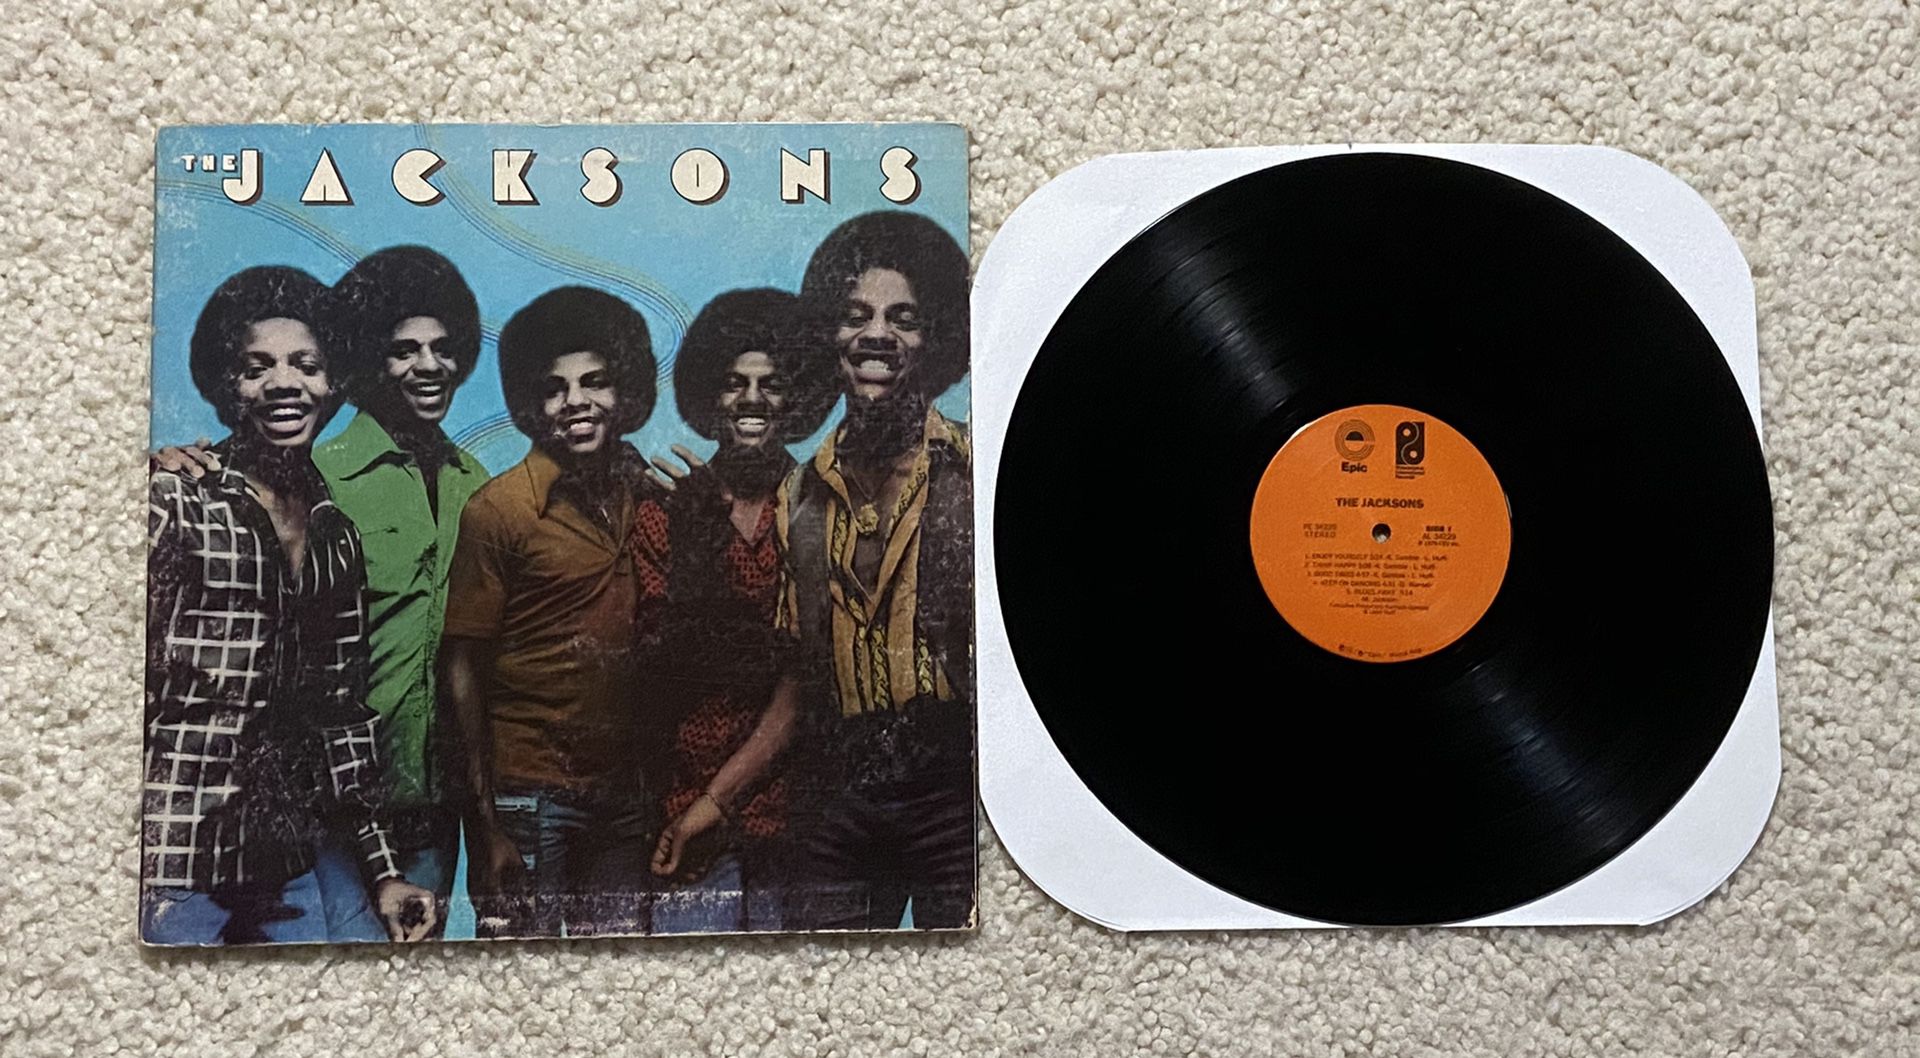 The Jacksons “The Jacksons” vinyl lp 1976 Epic Records Original 1st Pitman Pressing not a reissue beautiful glossy vinyl 70s Soul